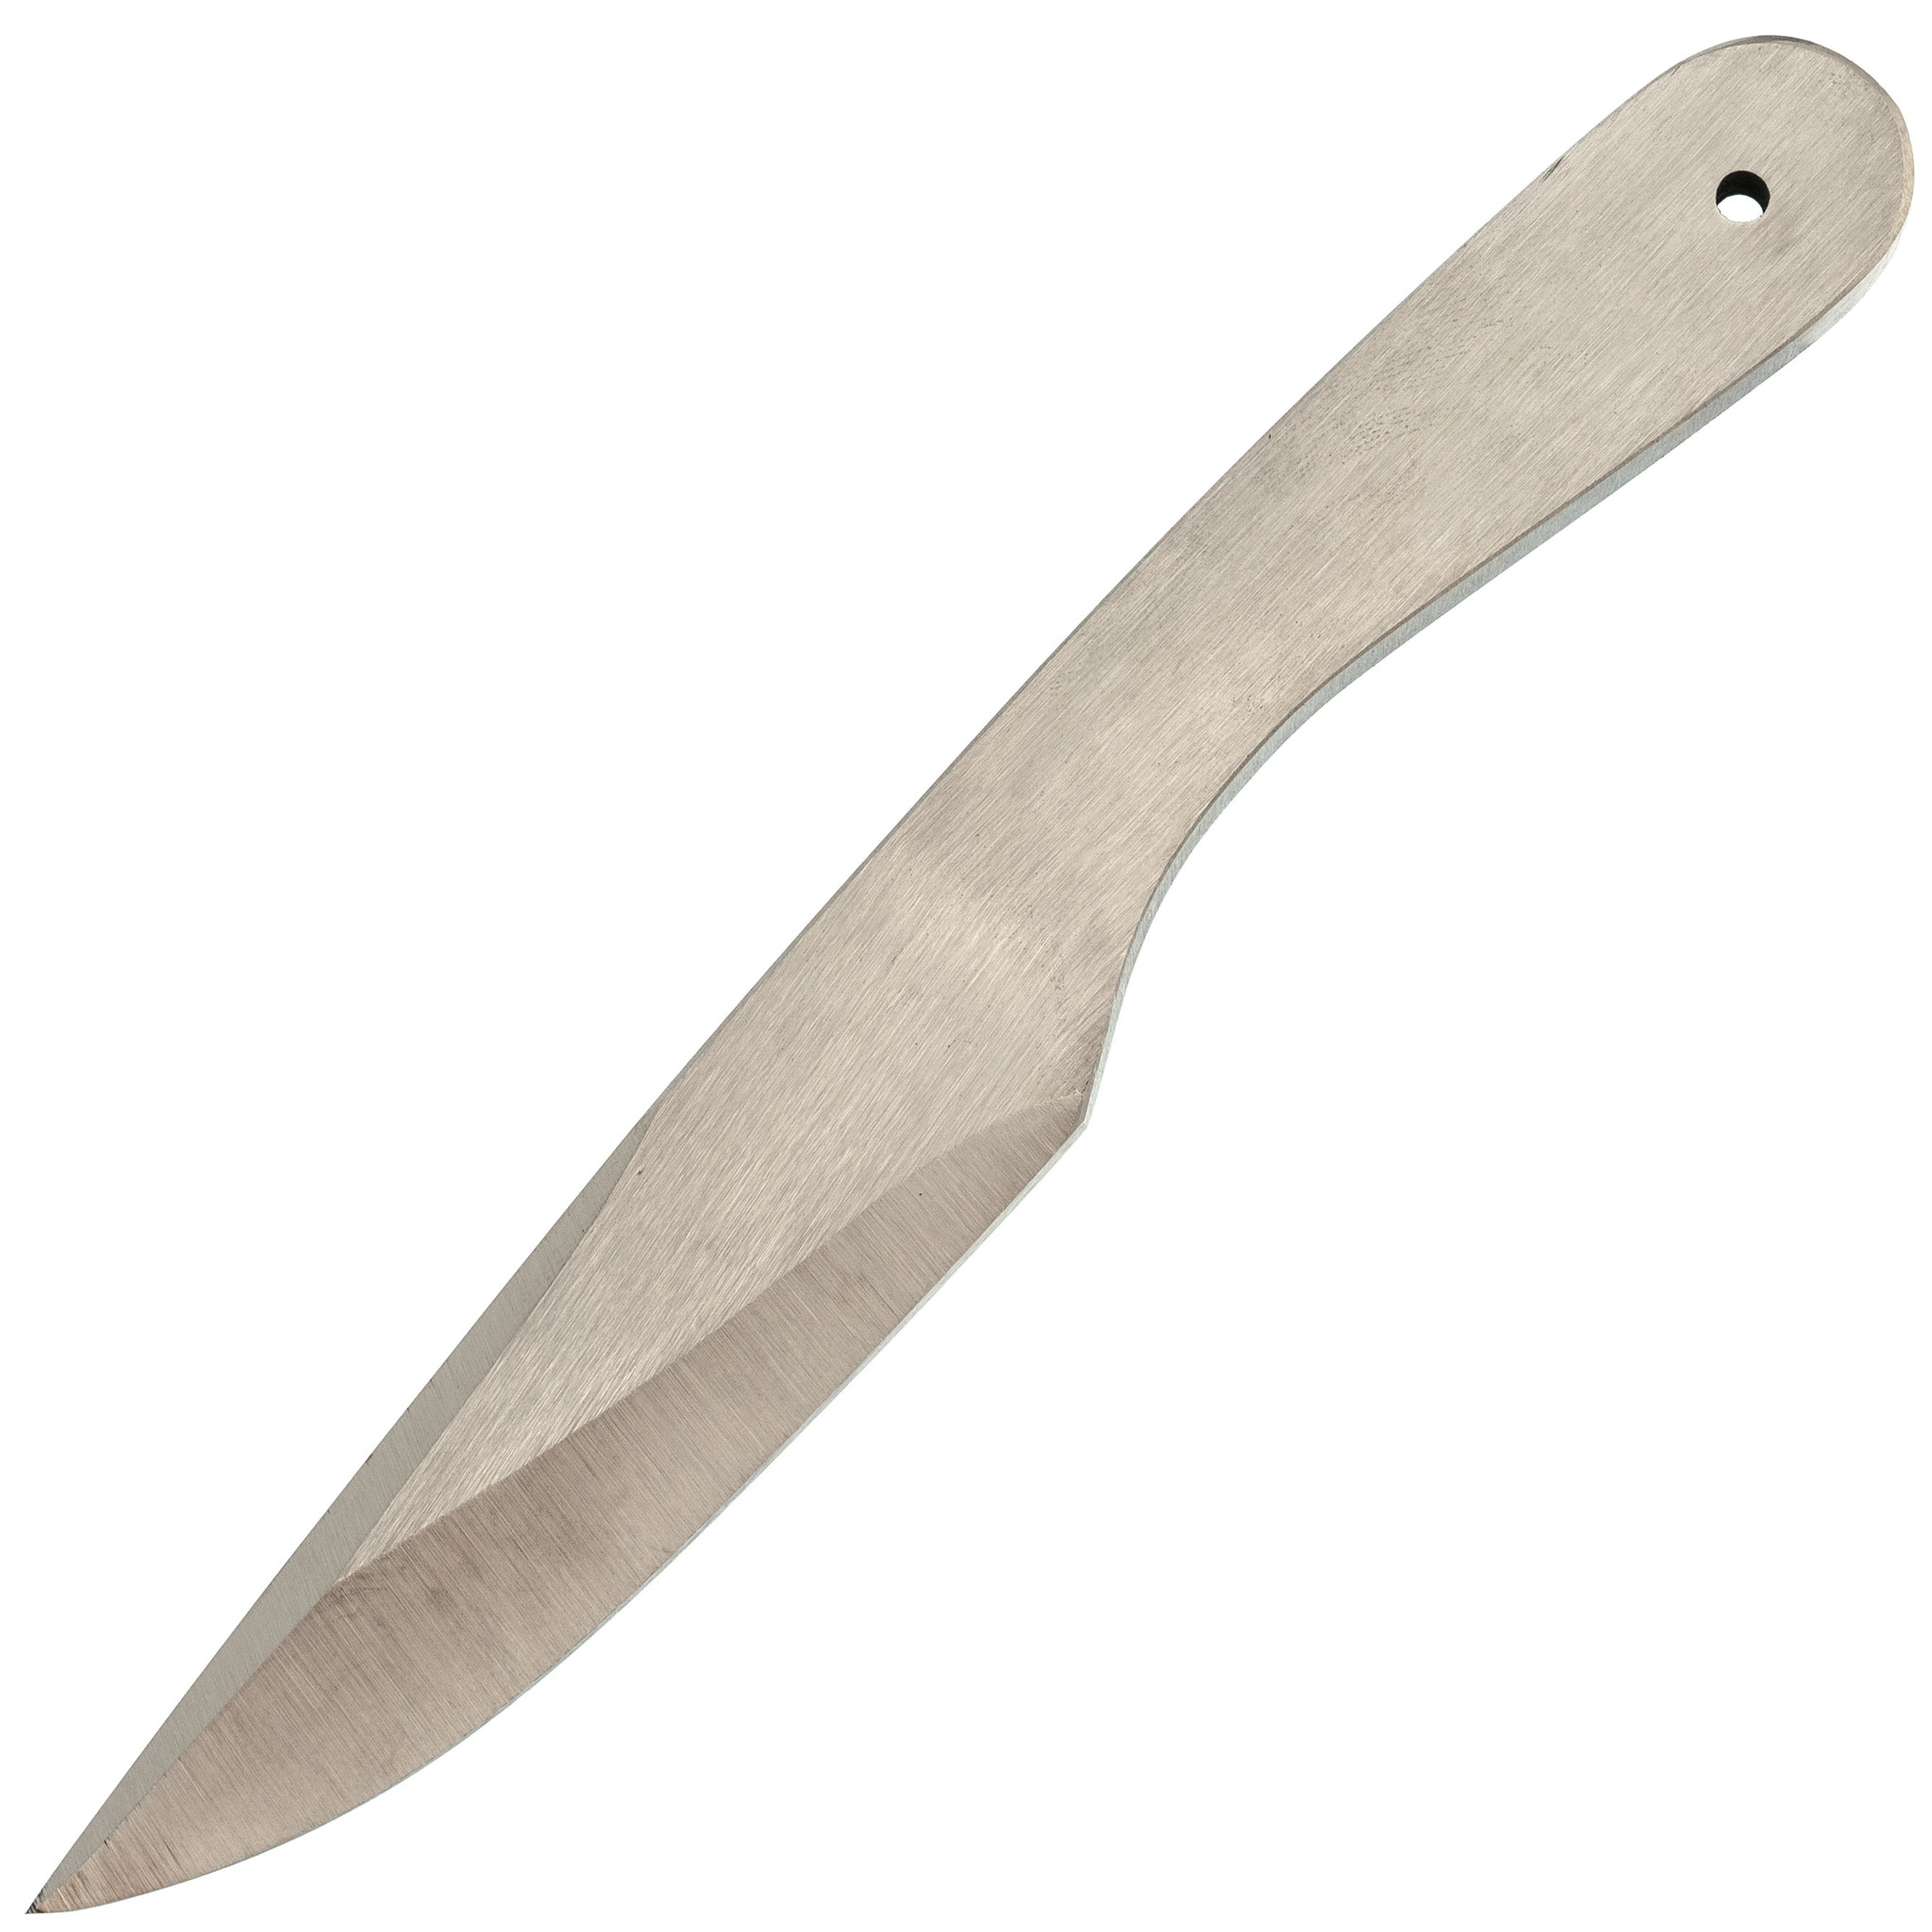 Спортивный нож Осетр мини, Коваль, сталь 65Г спортивный нож осетр коваль сталь 65г